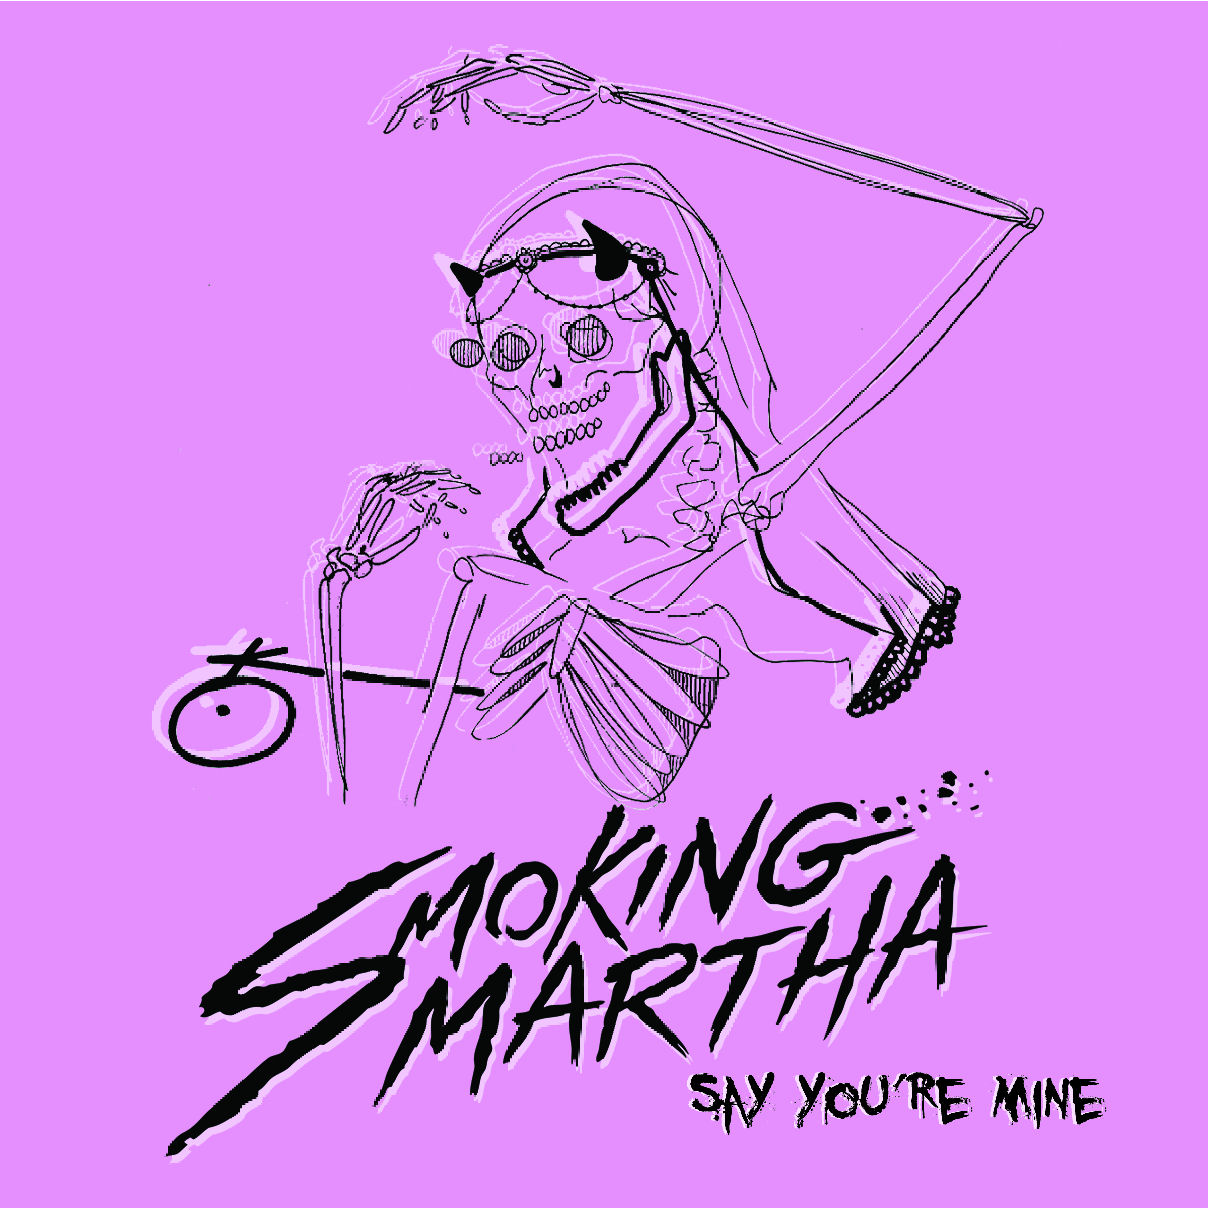  Smoking Martha – “Say You’re Mine”